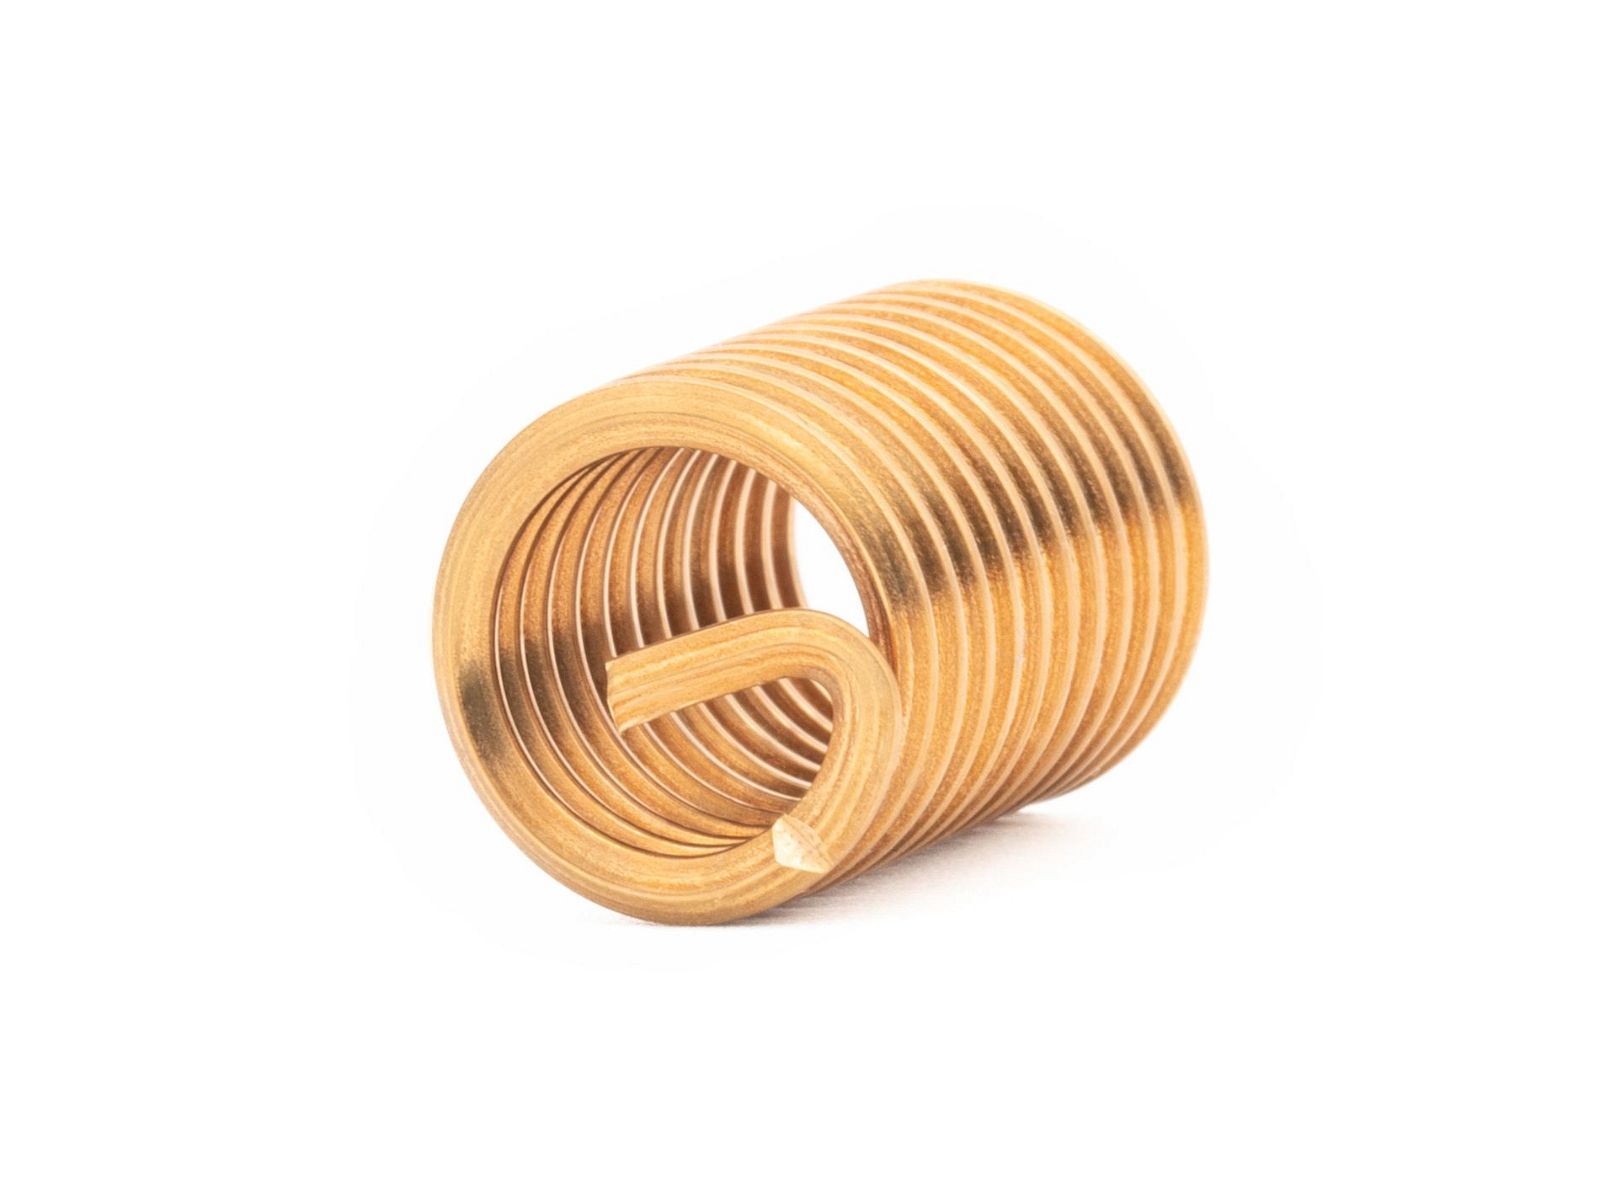 BaerCoil Wire Thread Inserts M 10 x 1.5 - 2.0 D (20 mm) - free running - Bronze - 100 pcs.